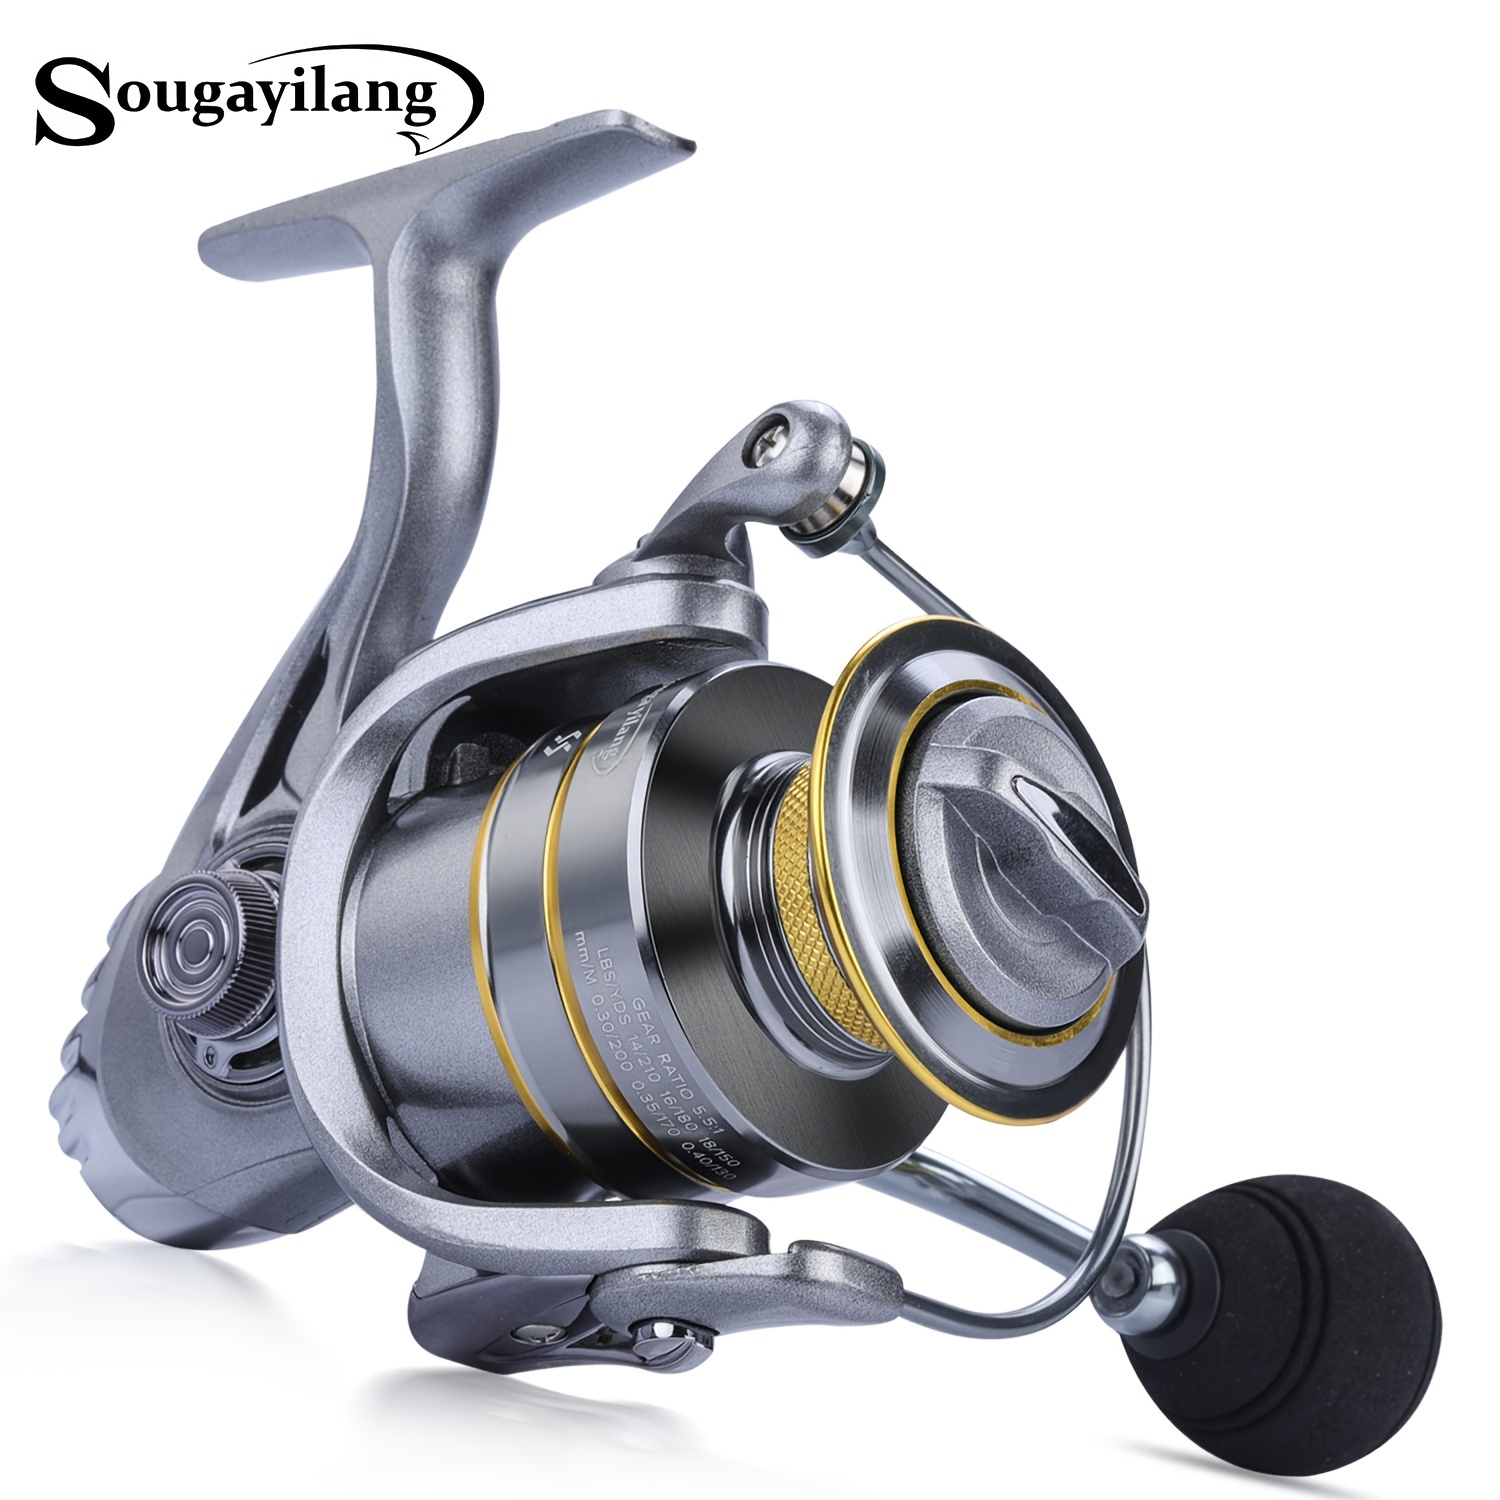 Sougayilang Aluminum Fishing Spinning Reel: Durable 5.2:1 Gear